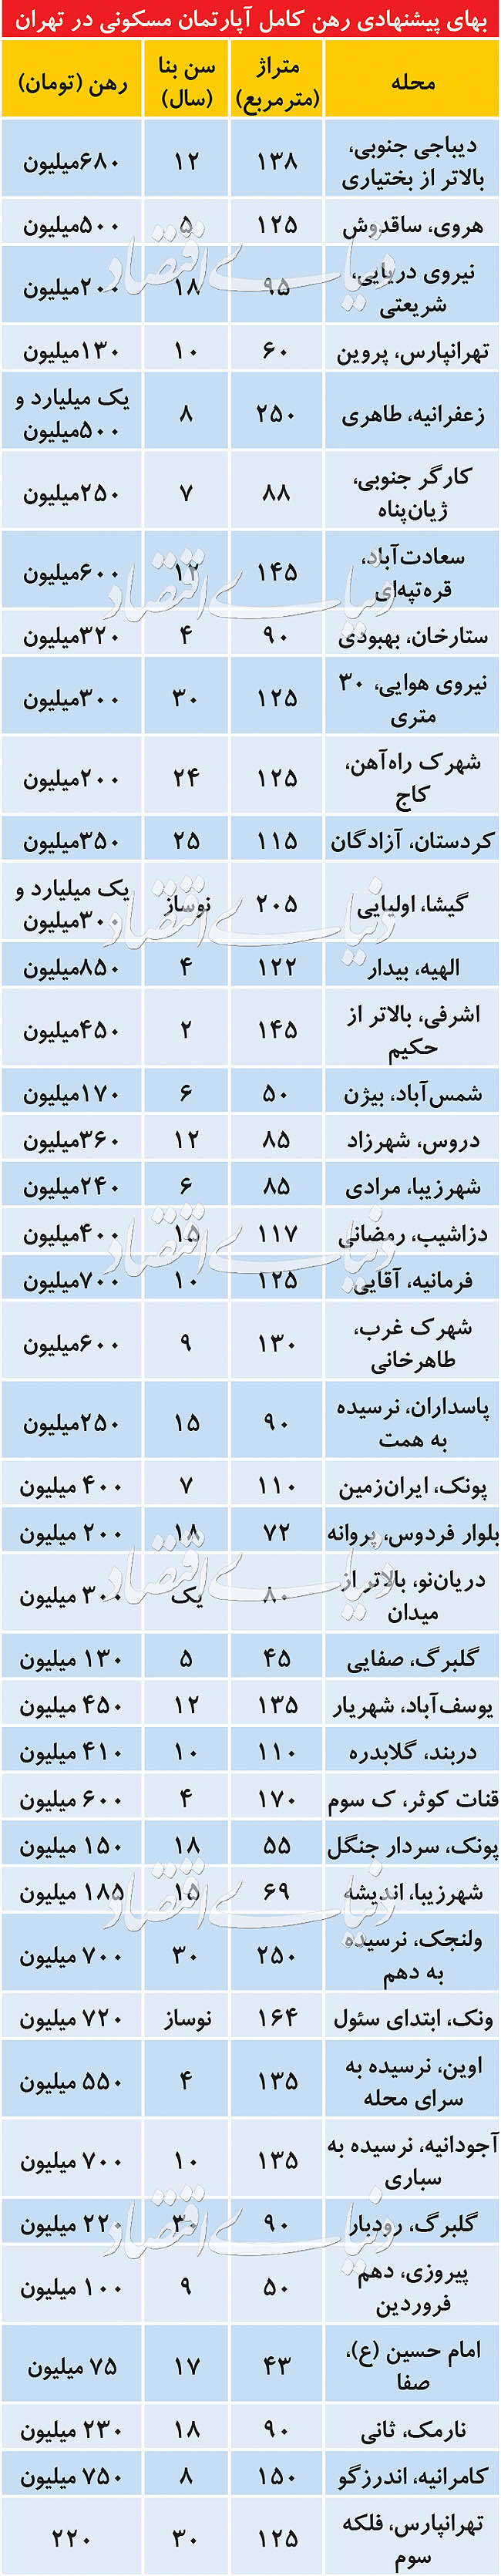 (جدول) قیمت رهن آپارتمان در مناطق مختلف تهران